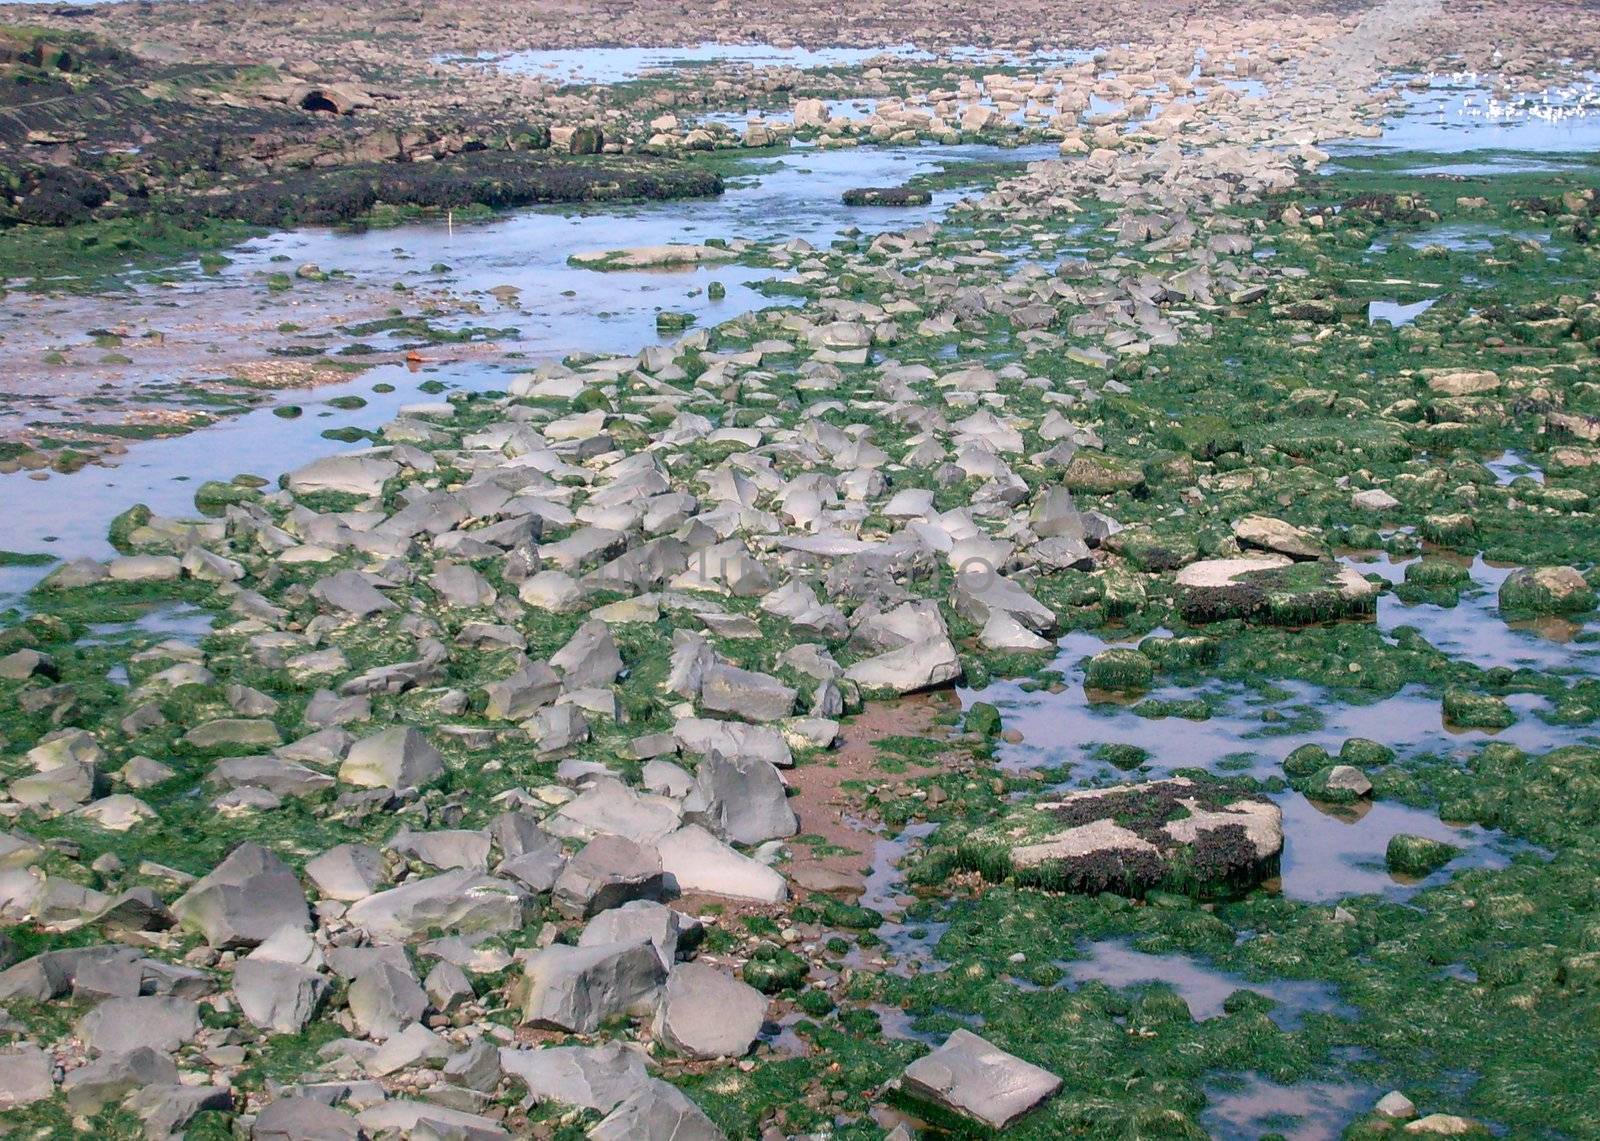 Rocky shoreline of cioast at low tide.